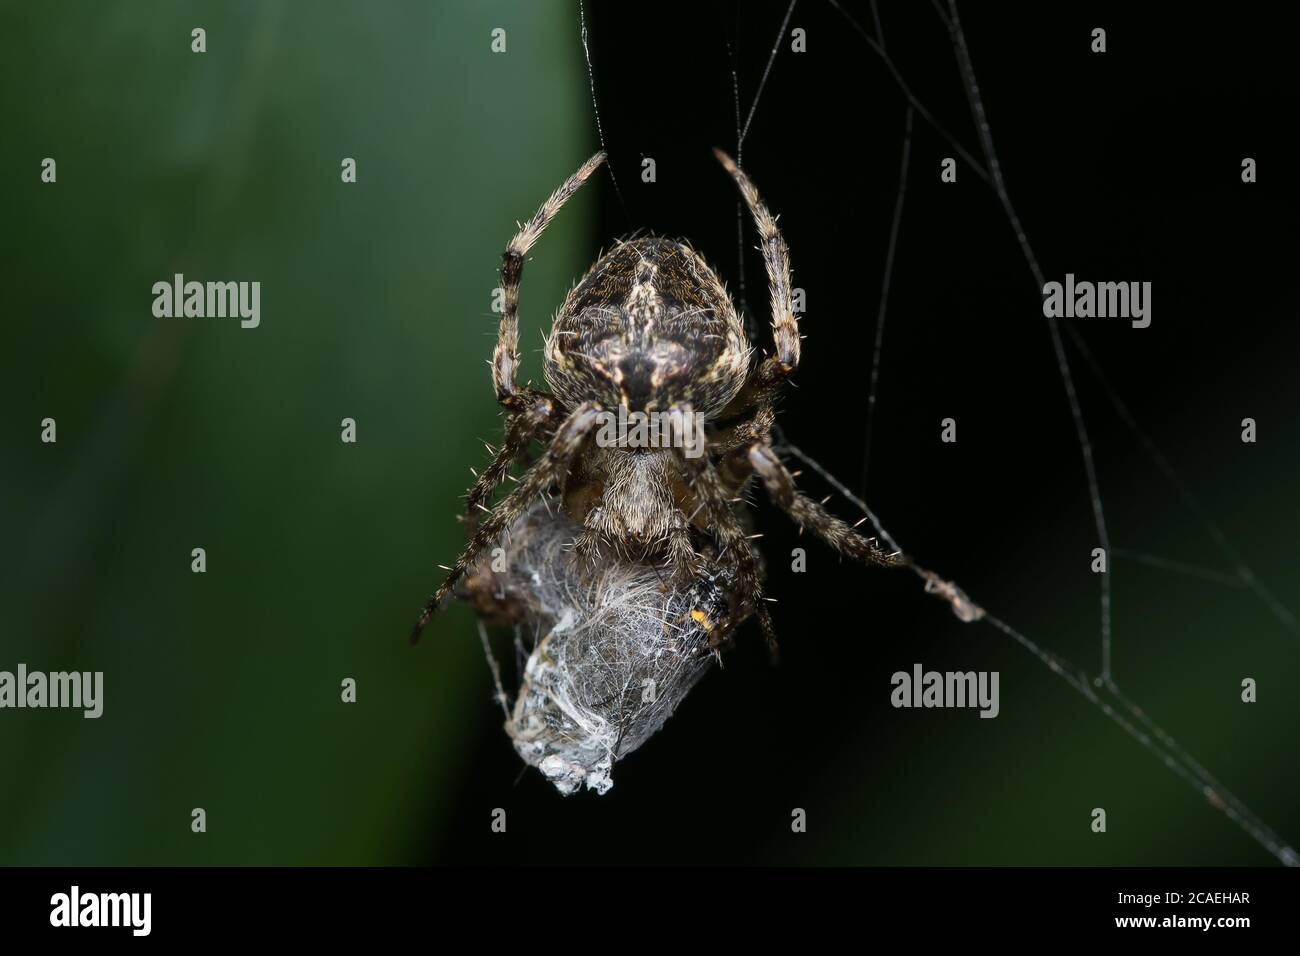 Closeup image of an orb weaver spider (Neoscona mukherjee) Araneidae feeding on other insect Stock Photo